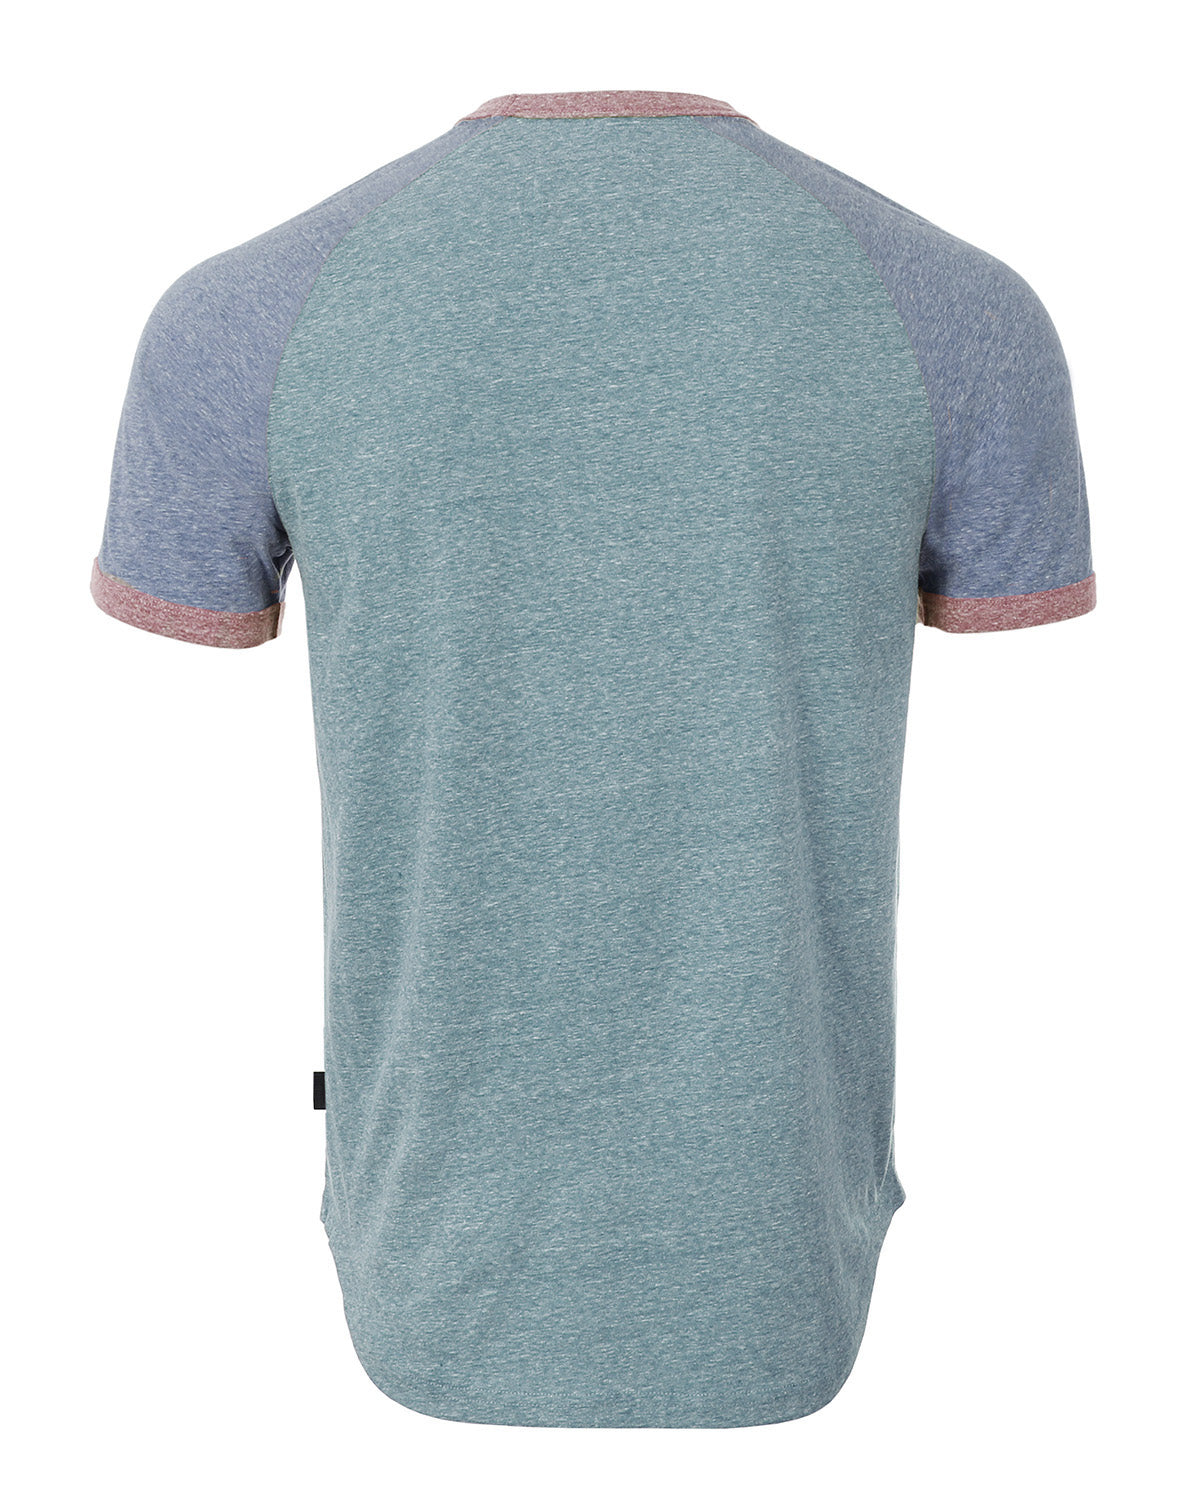 Men's Short Sleeve Classic Retro Contrast Raglan Ringer T-Shirt